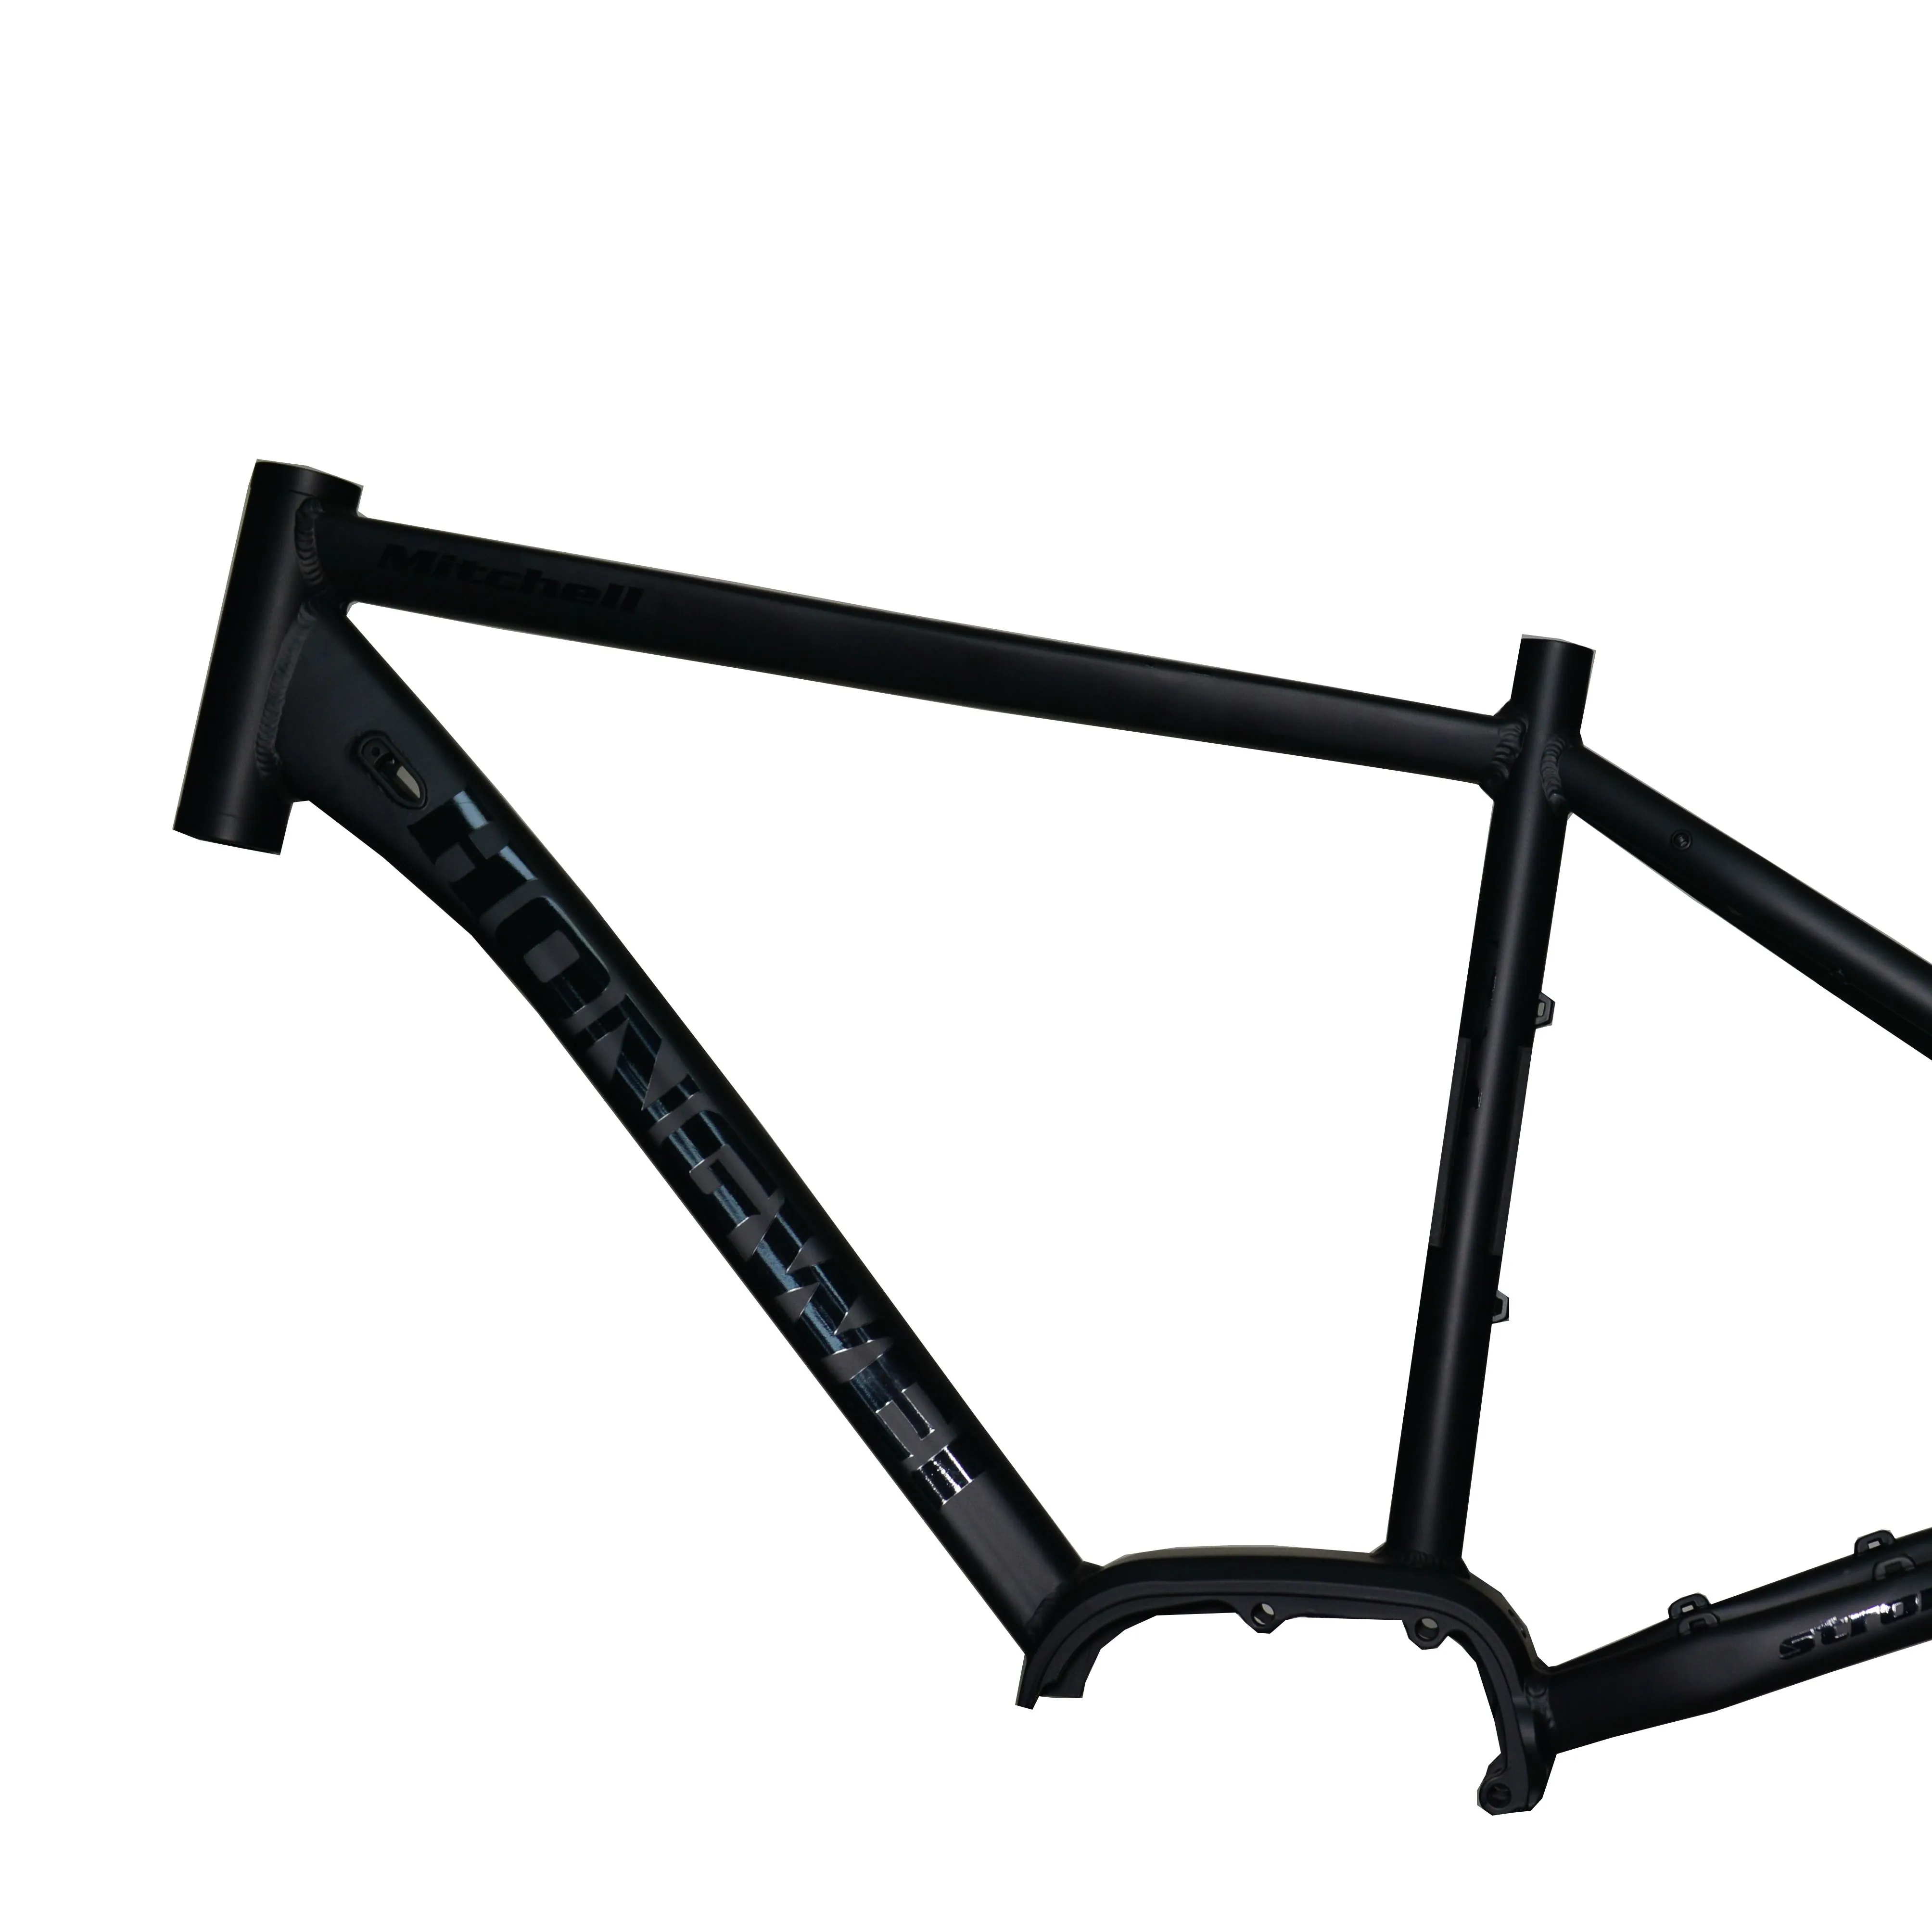 e bike frame for sale